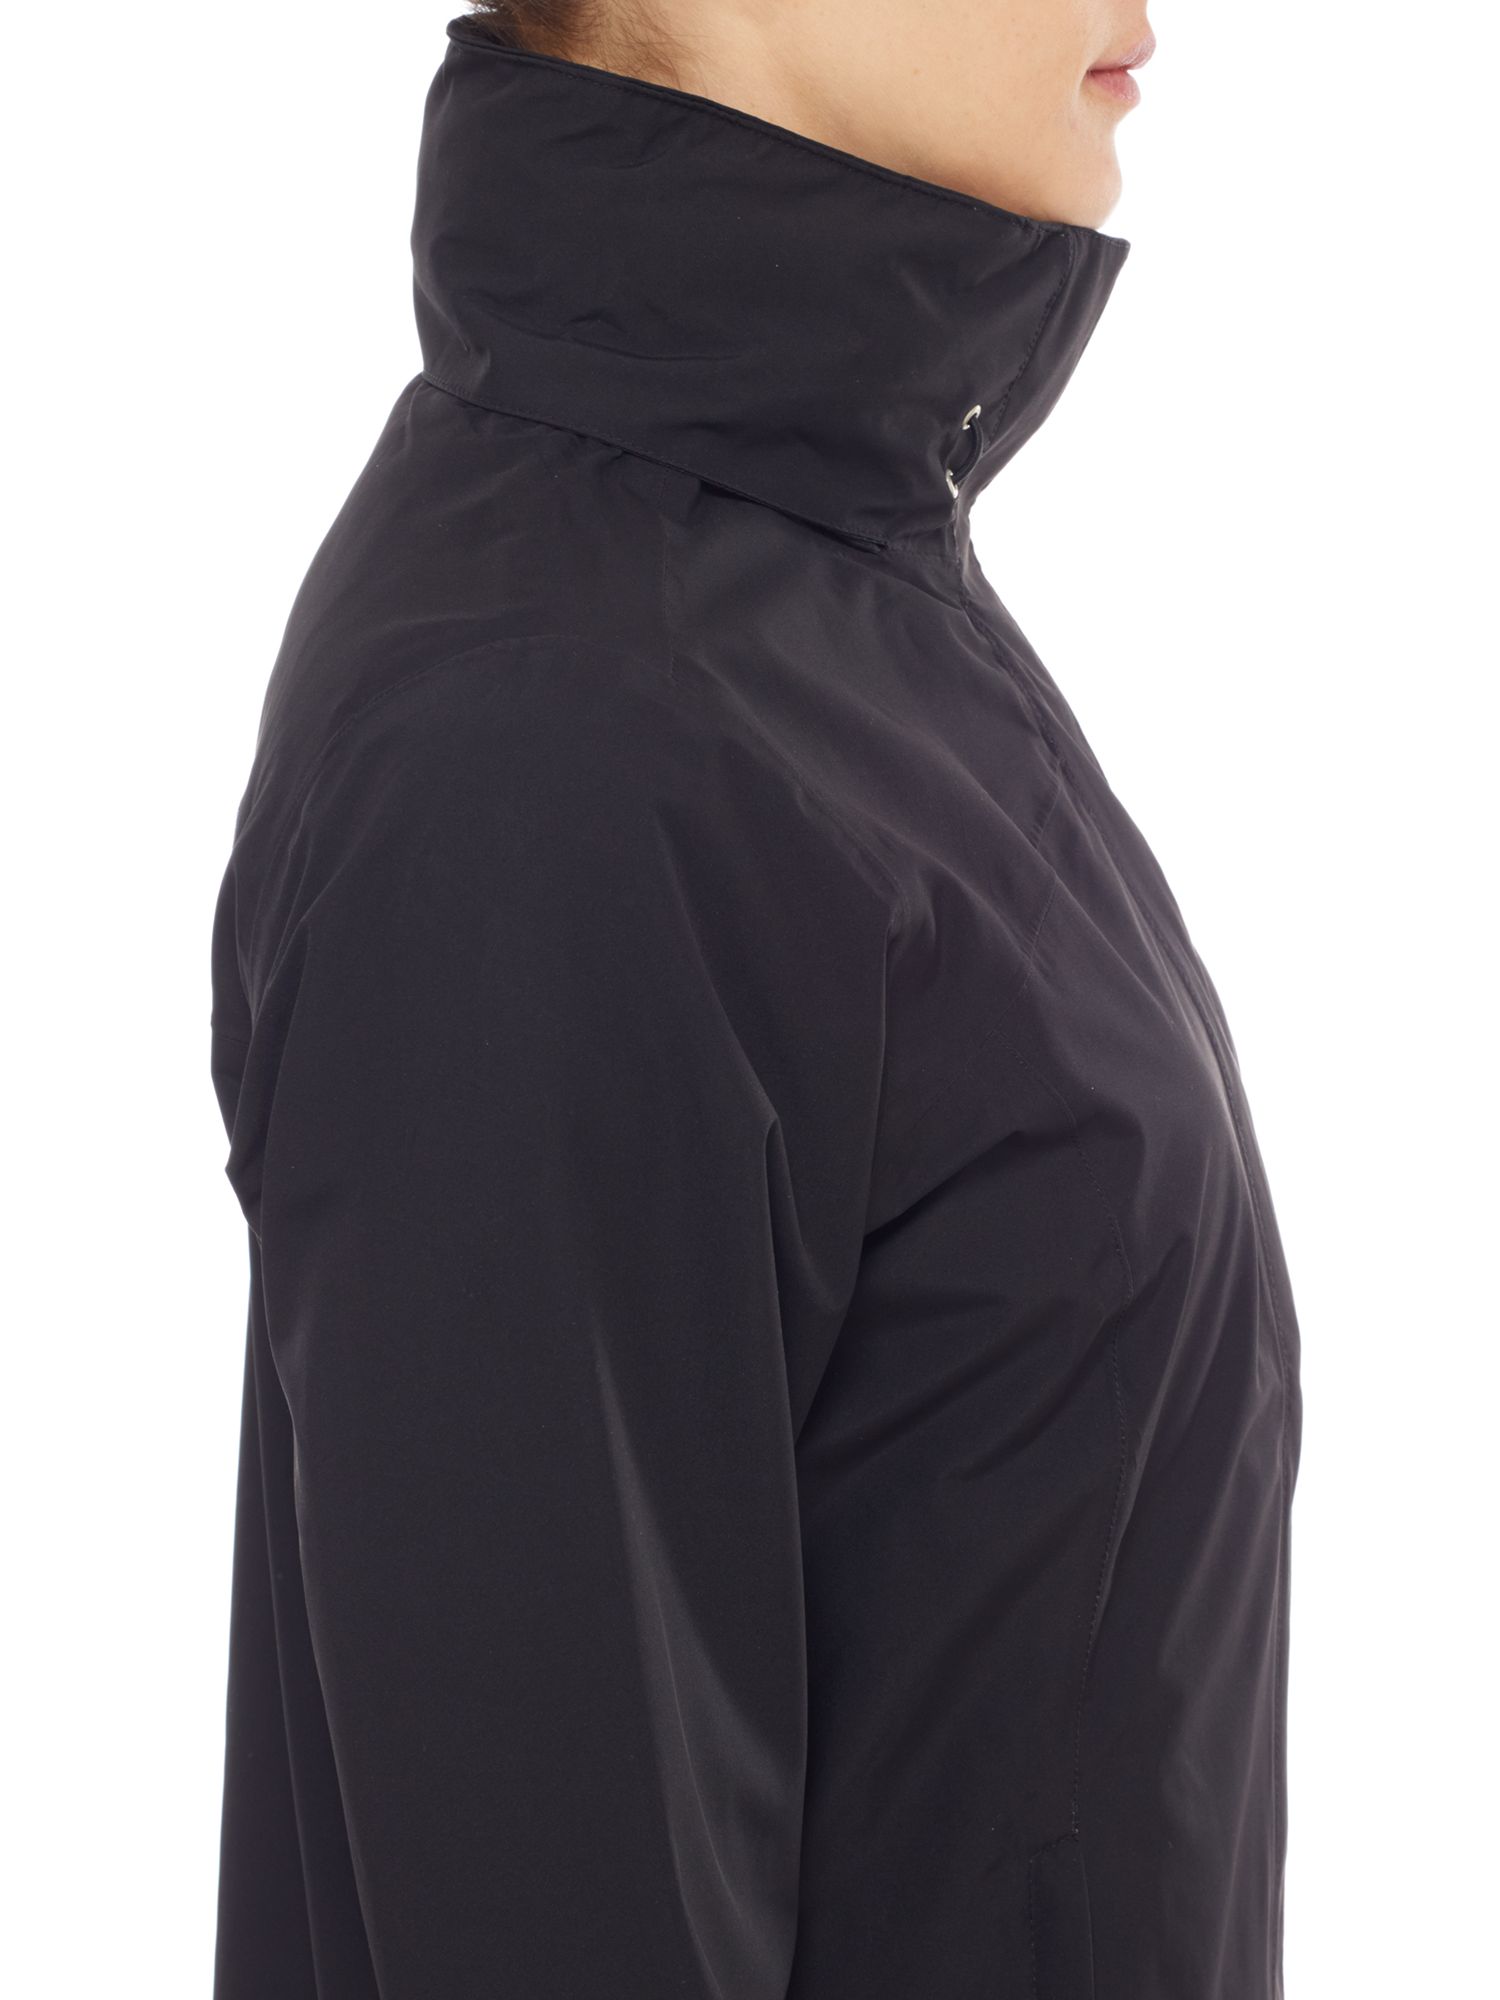 Buy The North Face Sangro Women's Waterproof Jacket Online at johnlewis.com